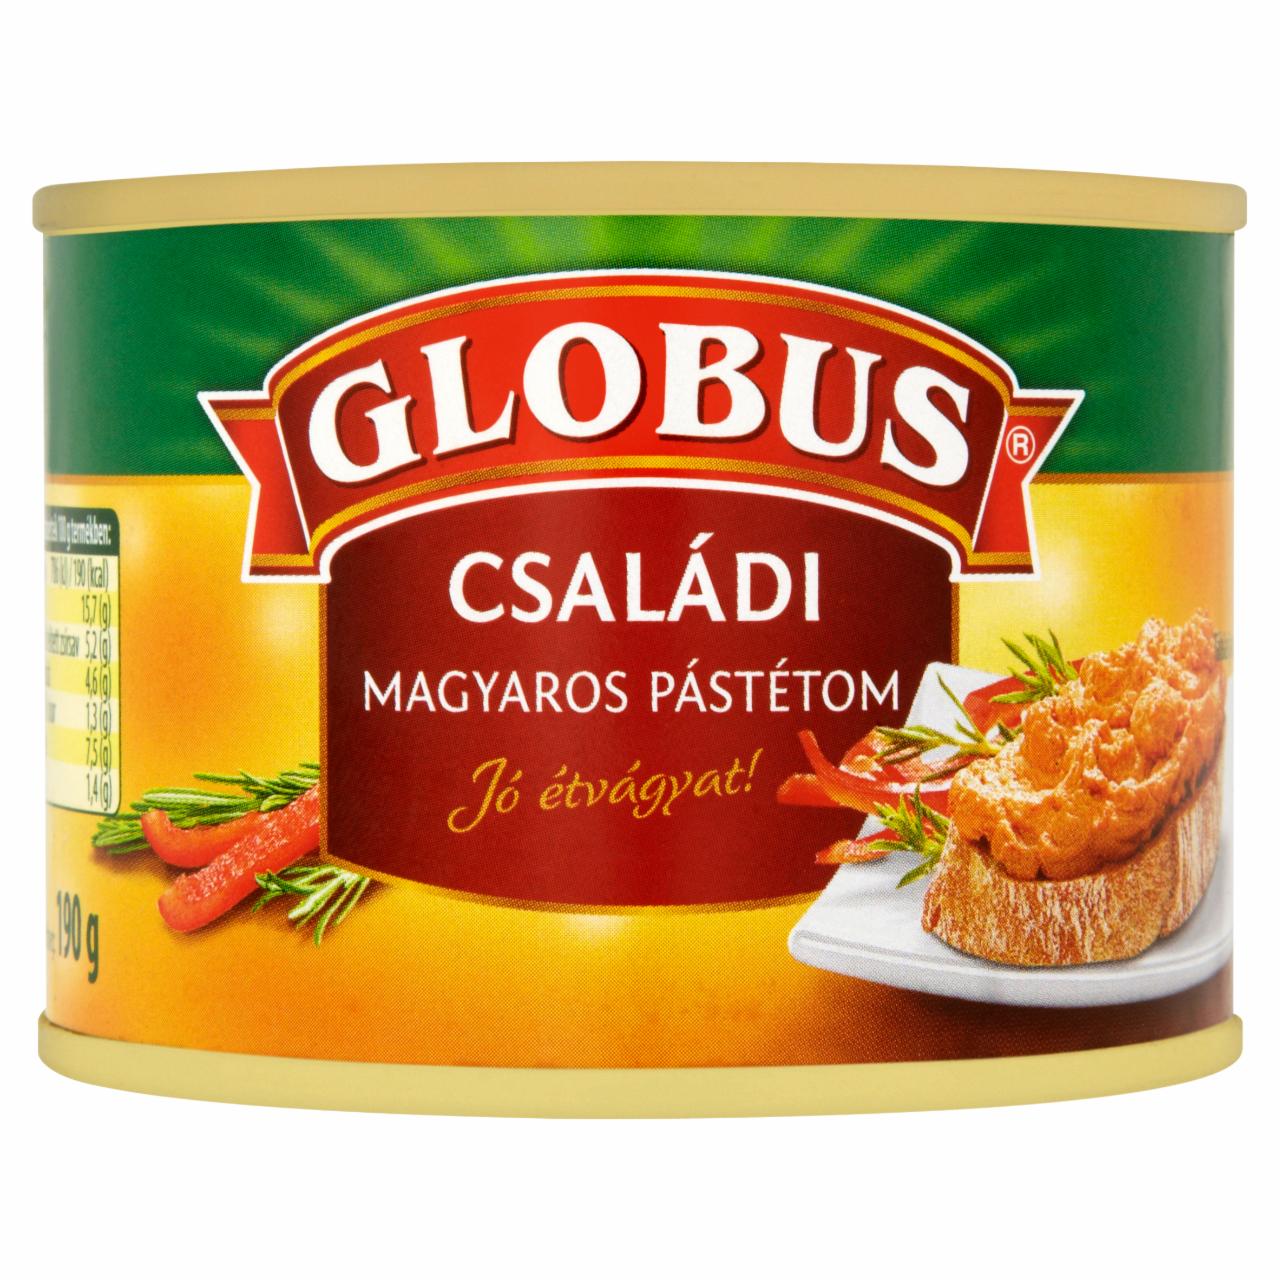 Képek - Globus családi magyaros pástétom 190 g